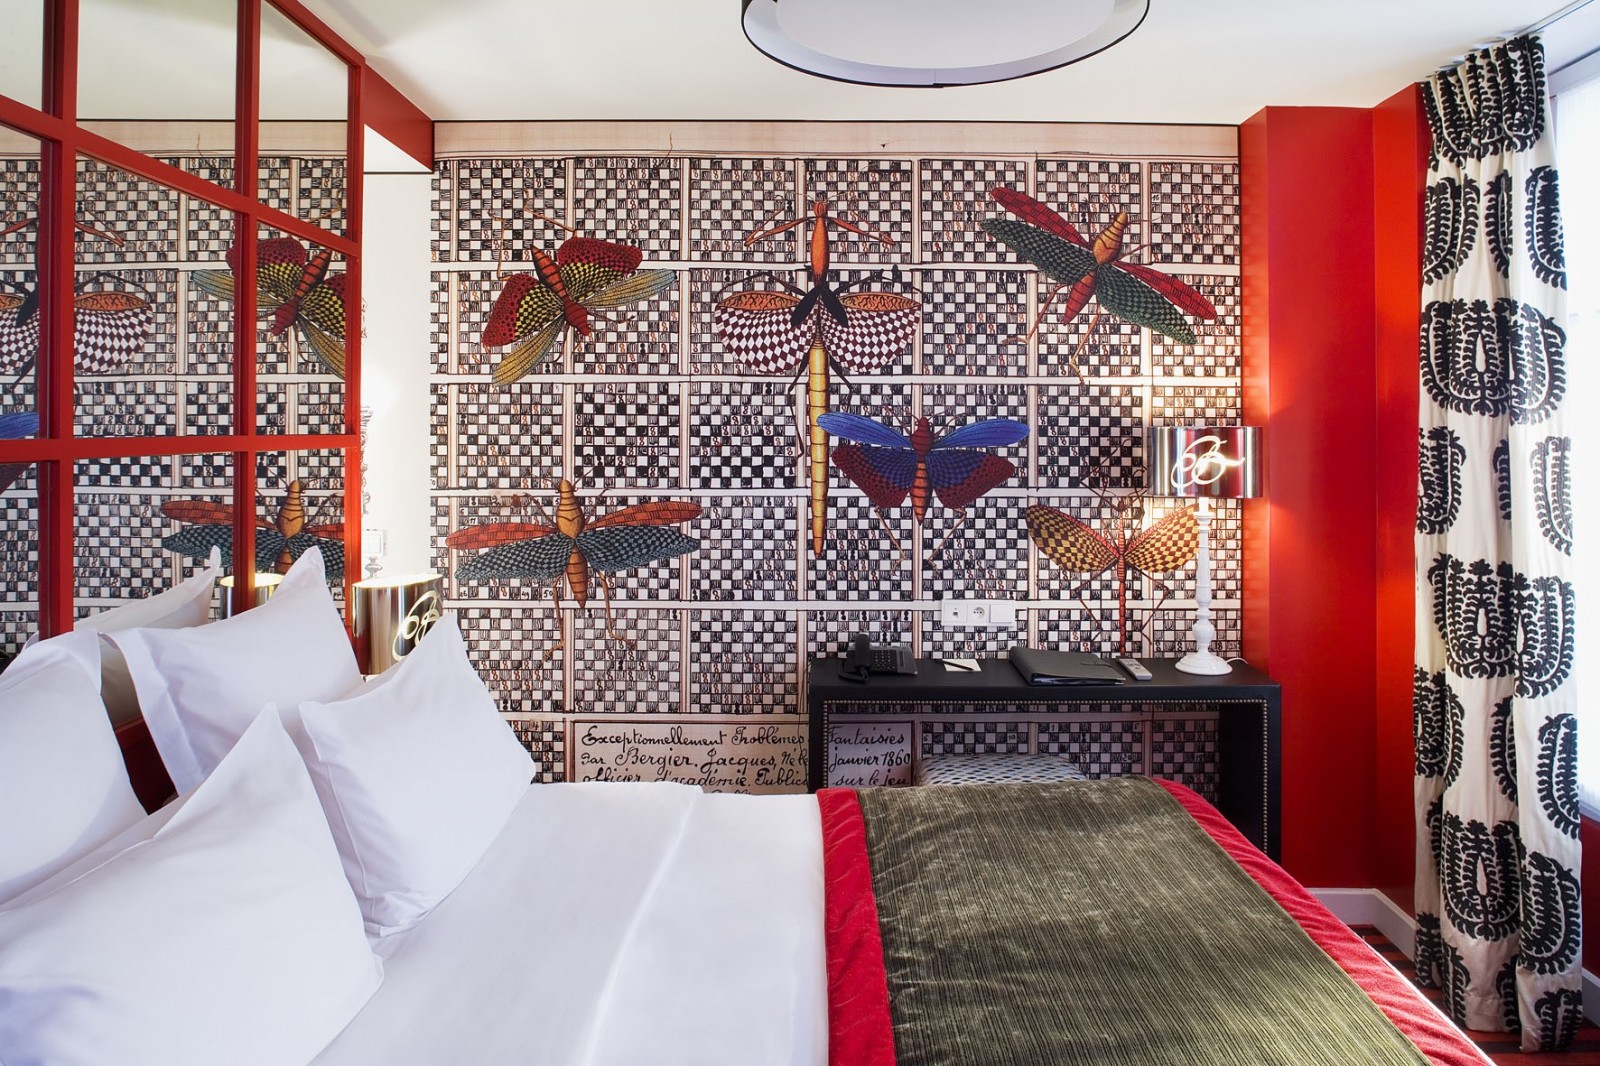 butterflies-interior-design-hotel-room-hotel-bellechasse-paris